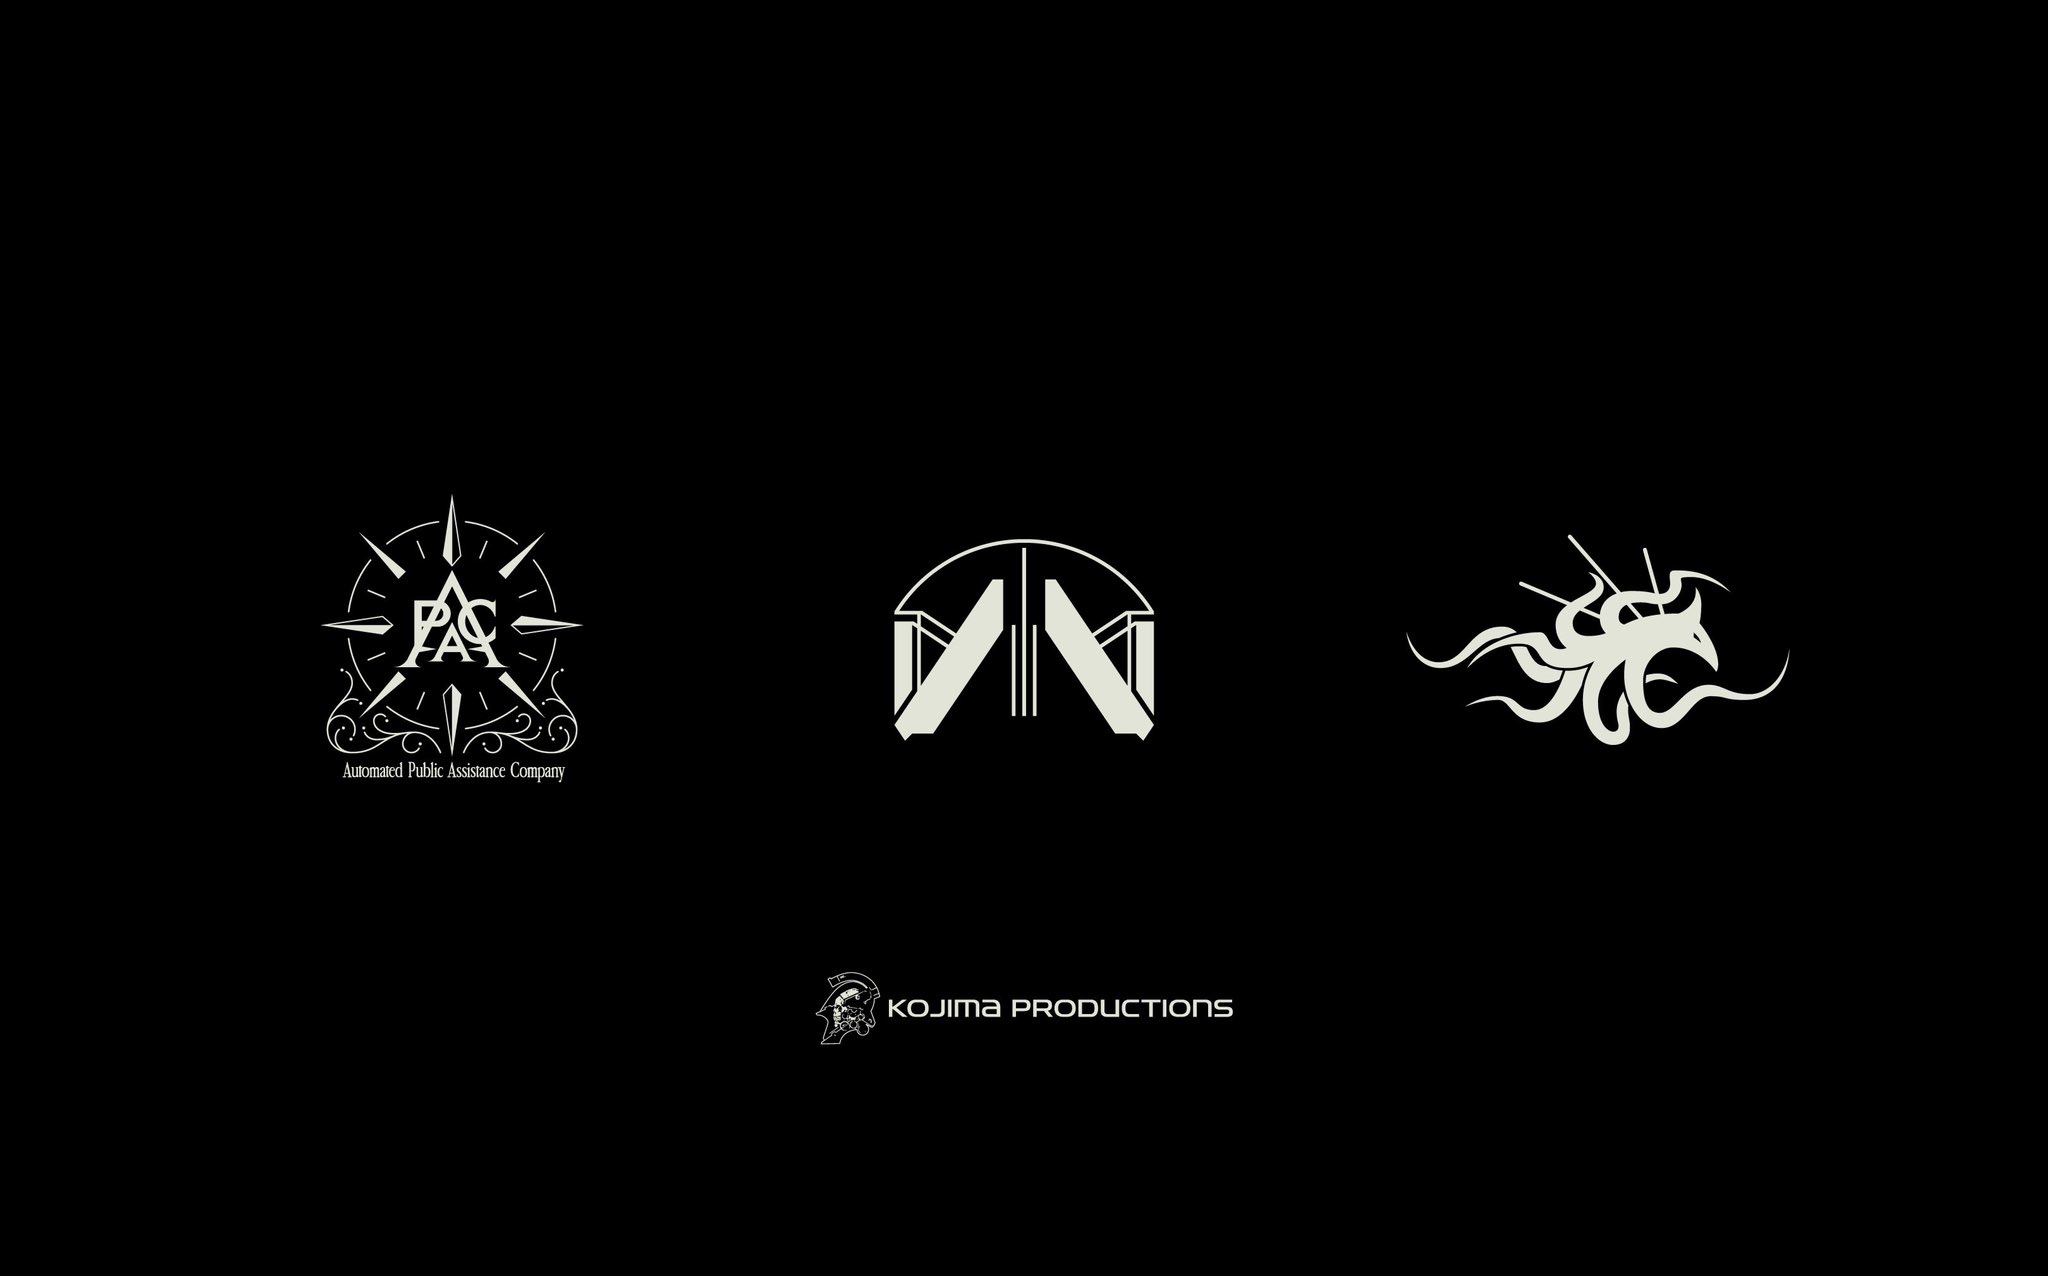 Kojima Productions Logos